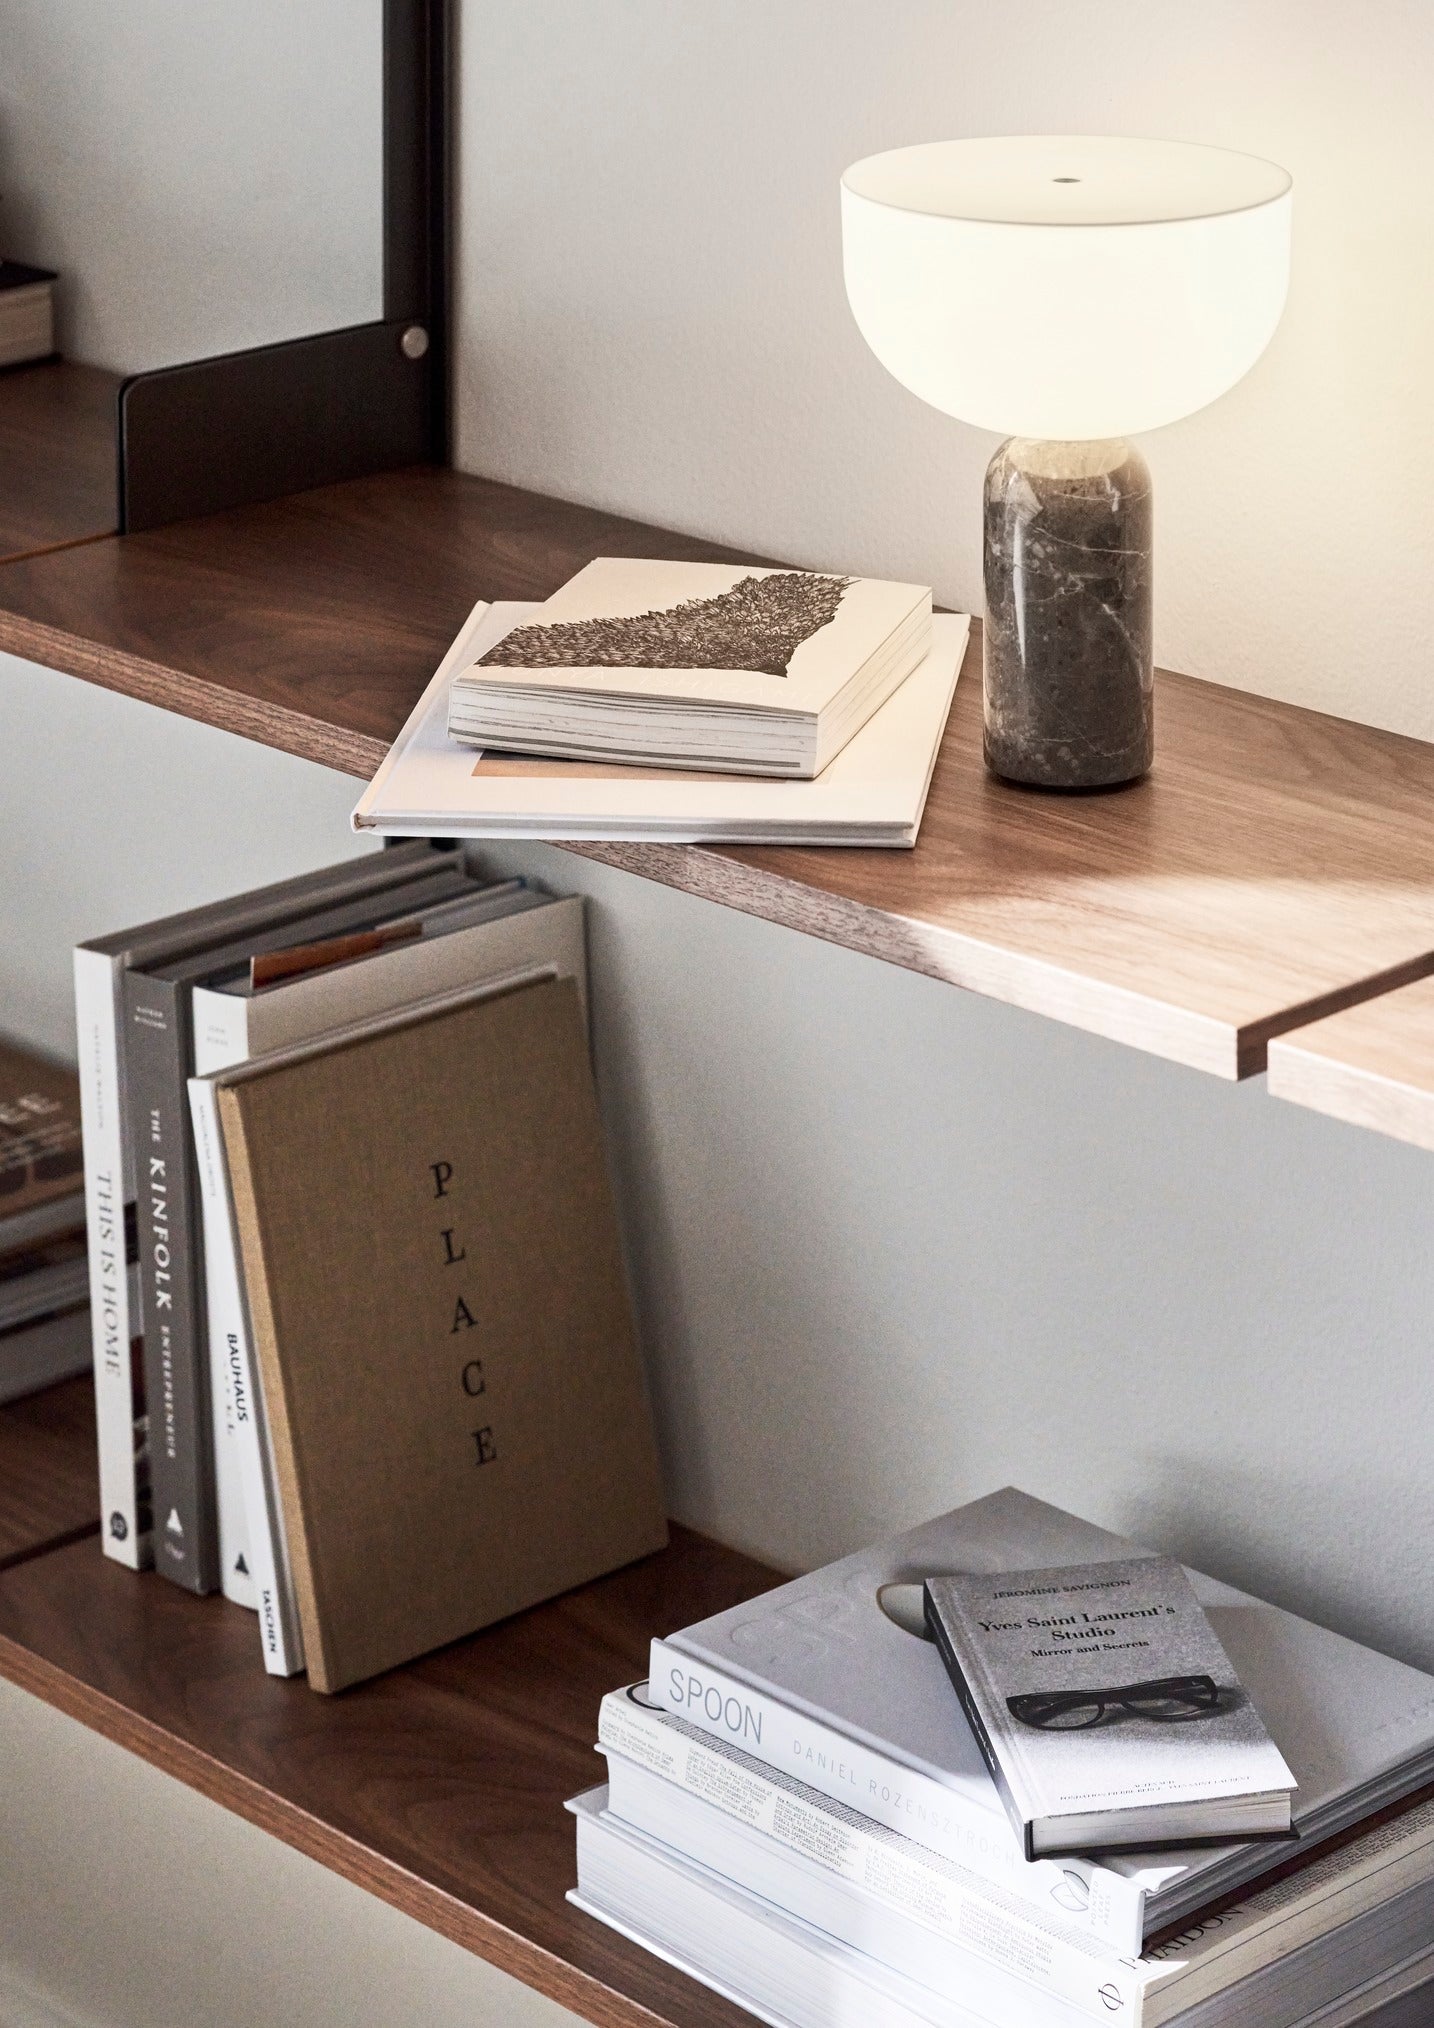 Kizu Portable Lamp Gris du Marais by New Works in wall shelving bookcase setting.